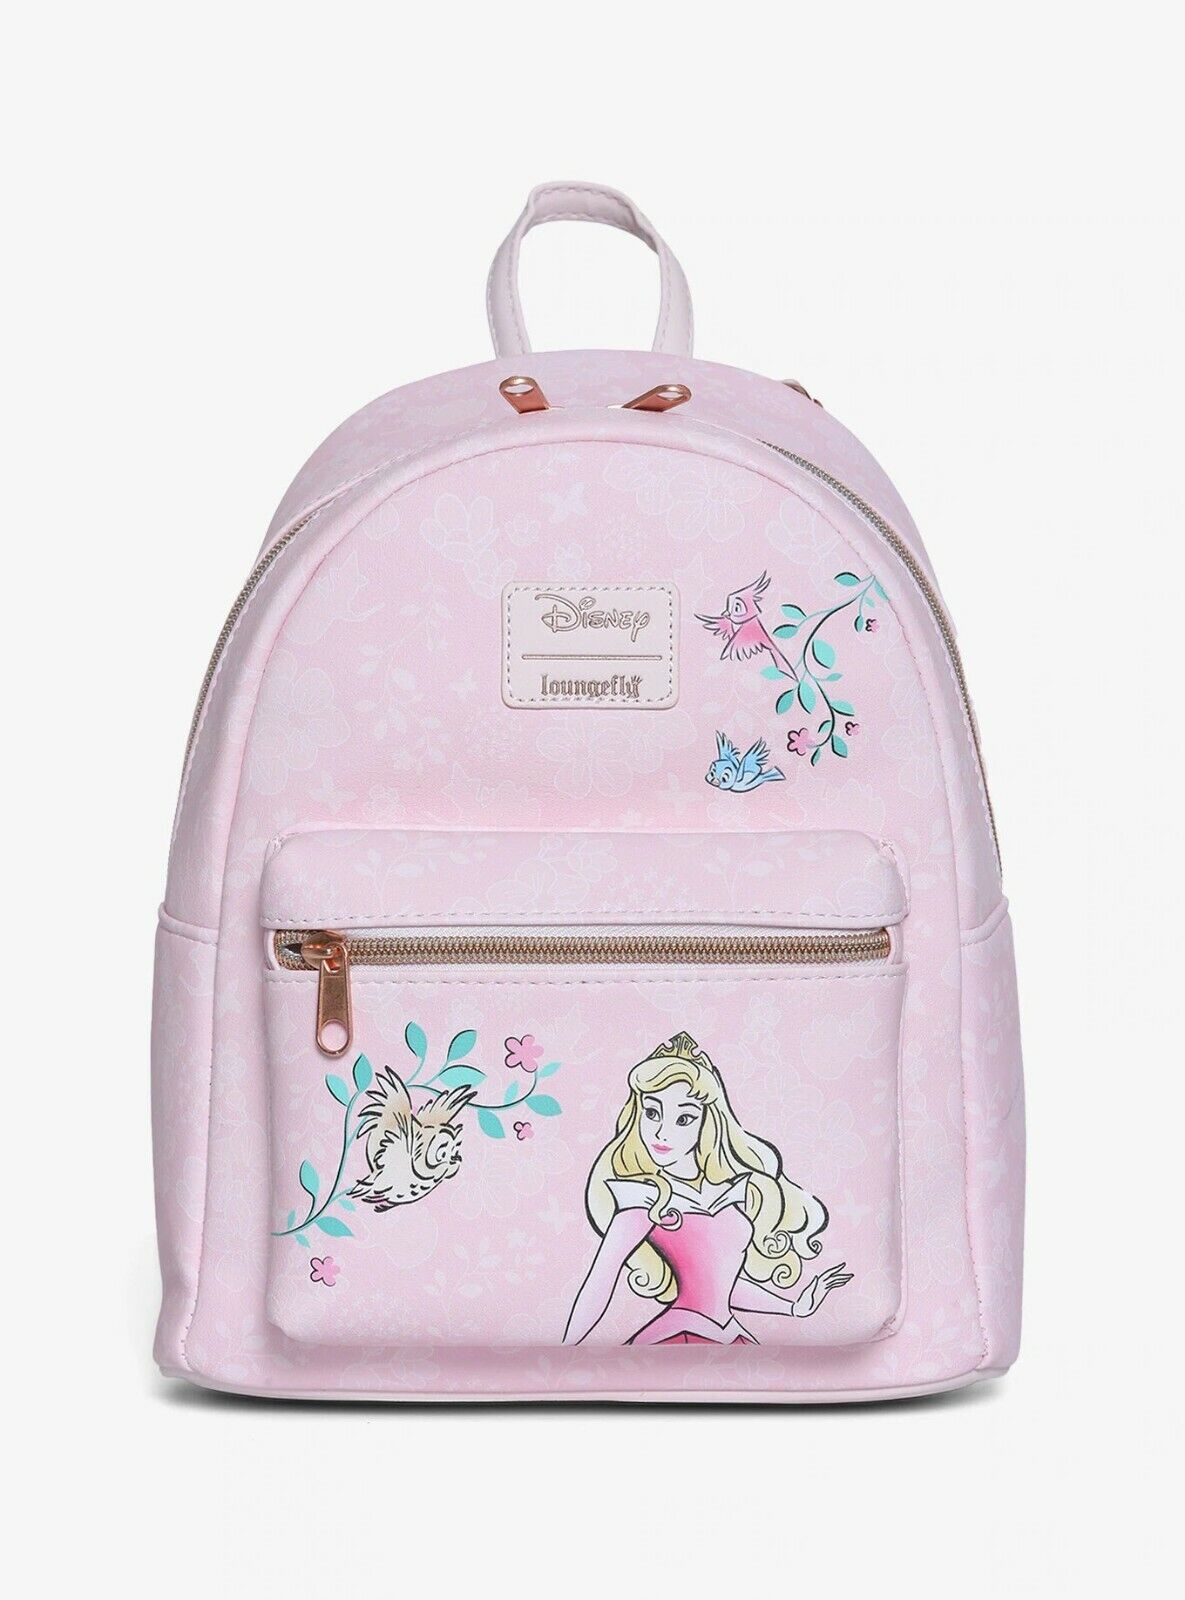 DISNEY Loungefly Princess Mini Backpack * AURORA / SLEEPING BEAUTY SKETCH